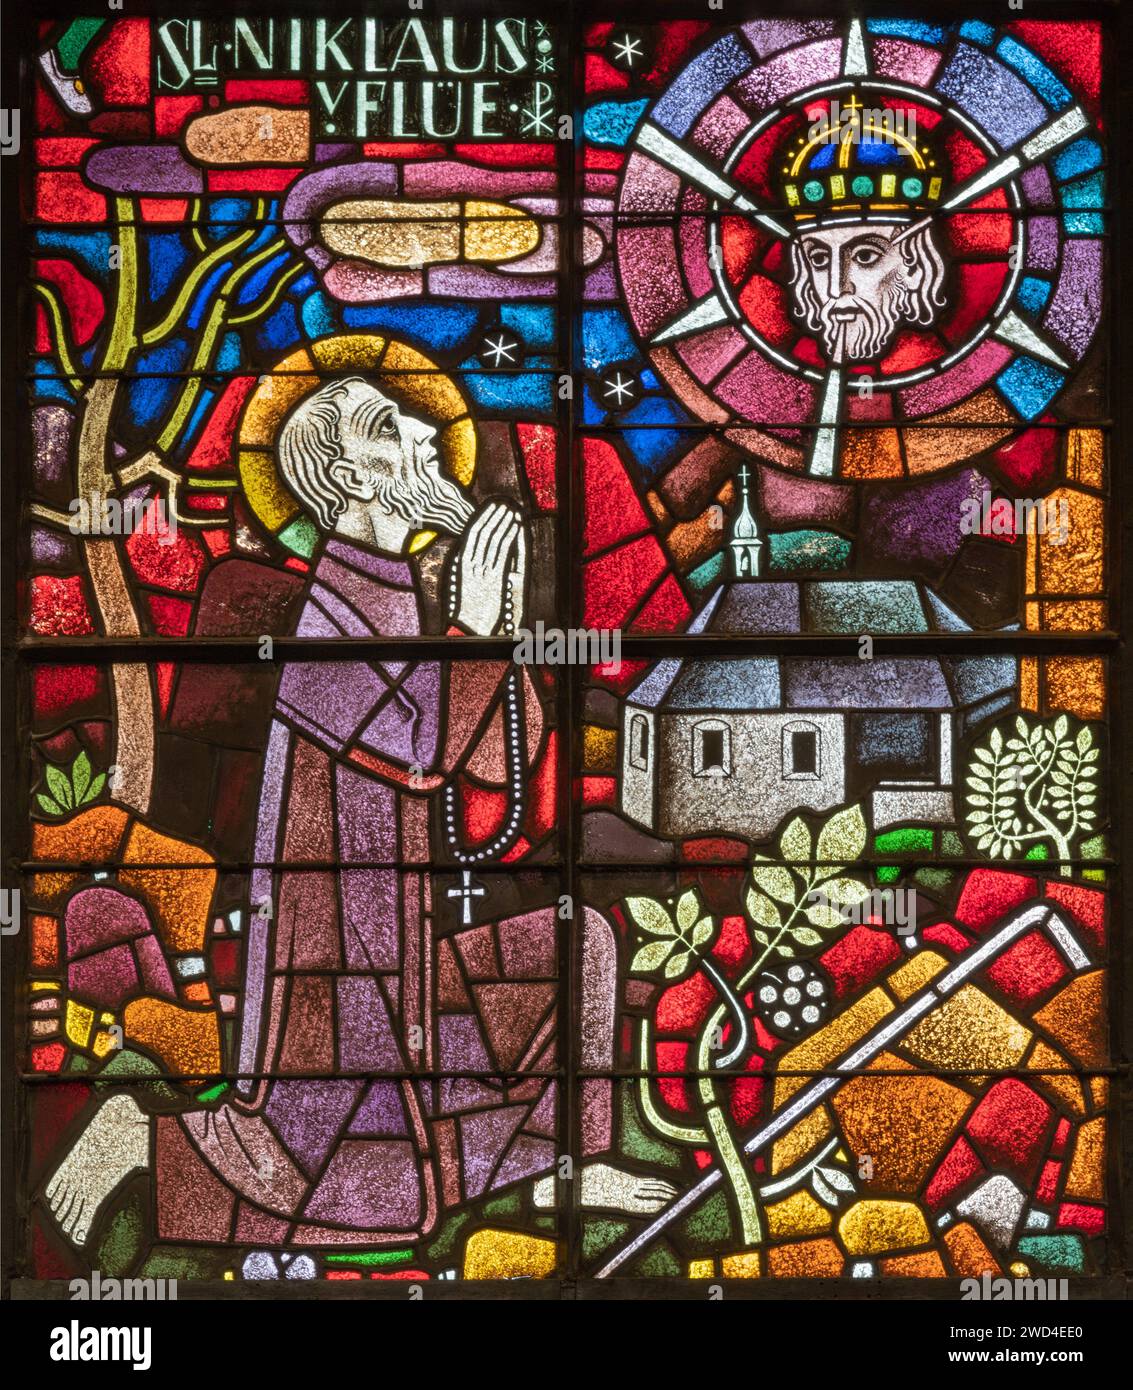 BERN, SWITZERLAND - JUNY 27, 2022: The St. Nicholas of Flue on the stained glass in the church Dreifaltigkeitskirche by A. Schweri (1938). Stock Photo